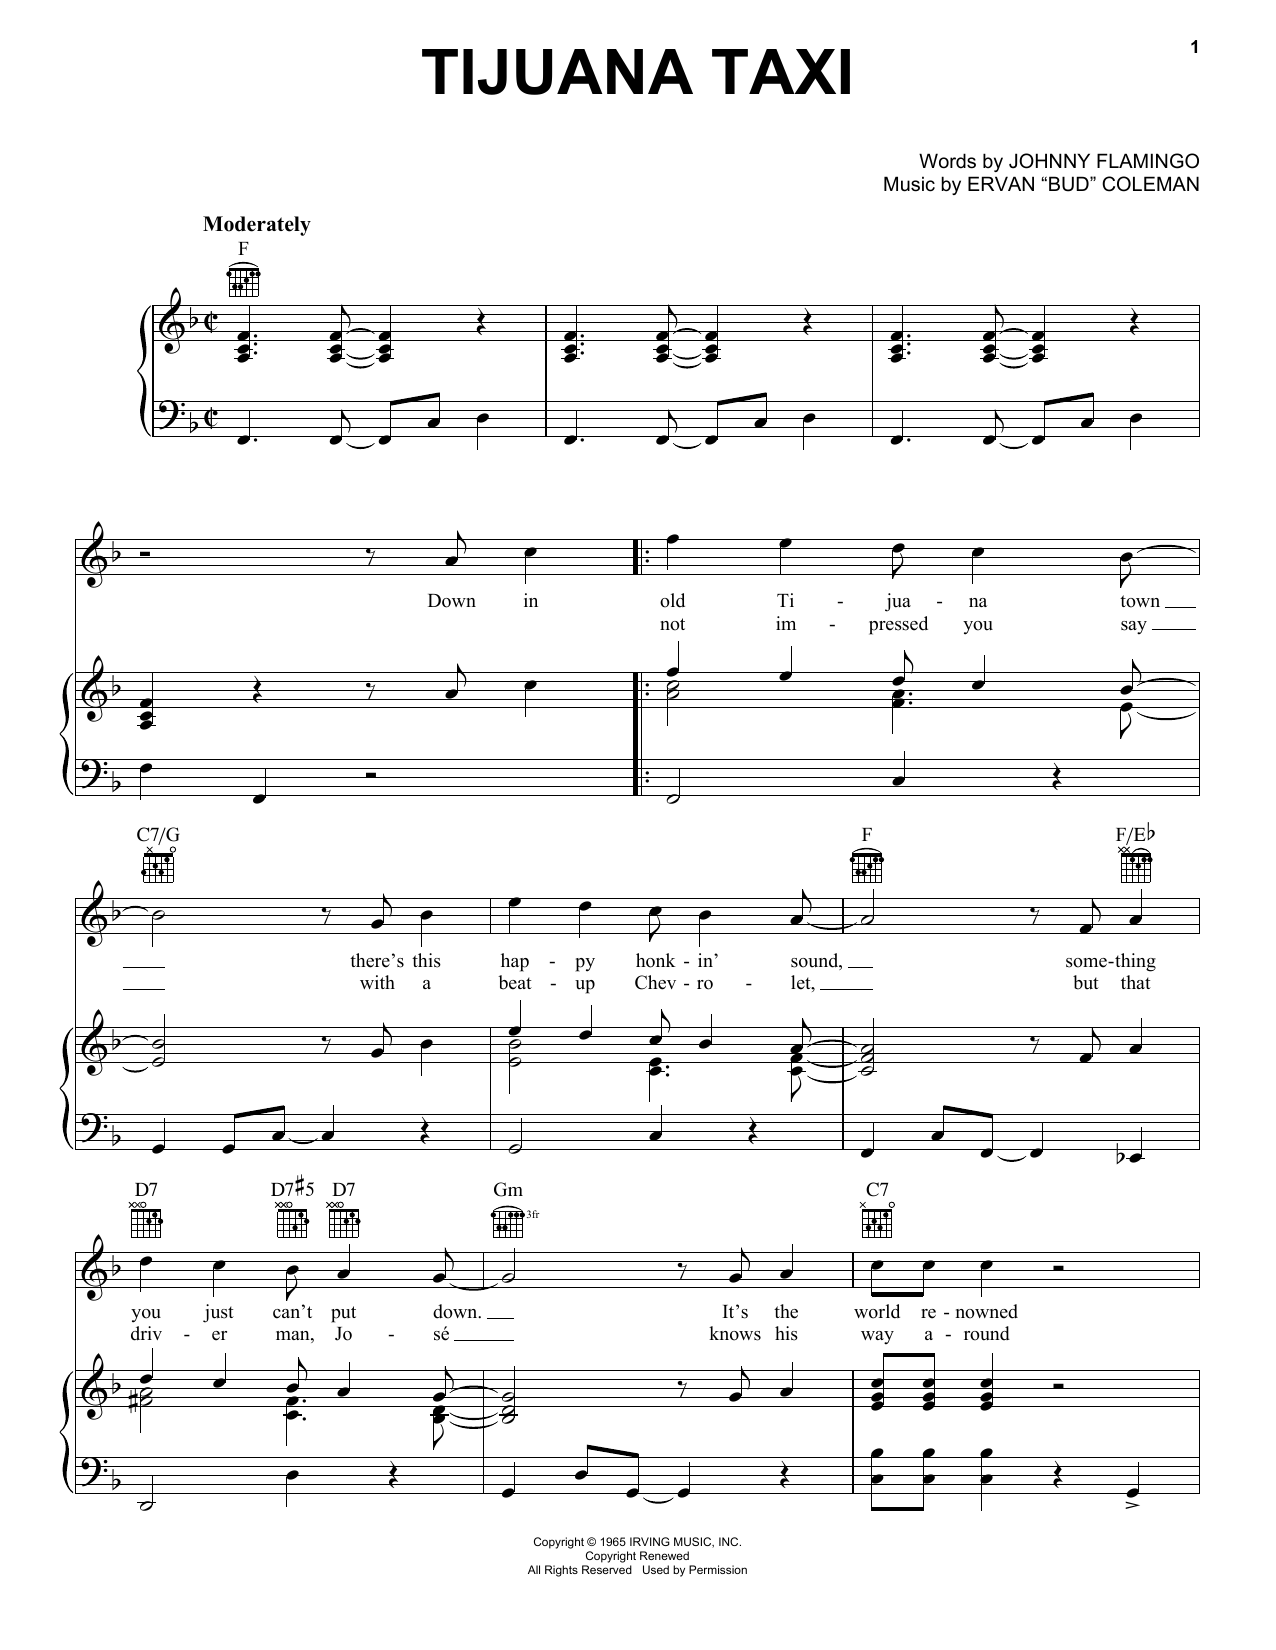 Herb Alpert & The Tijuana Brass Band Tijuana Taxi Sheet Music Notes & Chords for Viola - Download or Print PDF